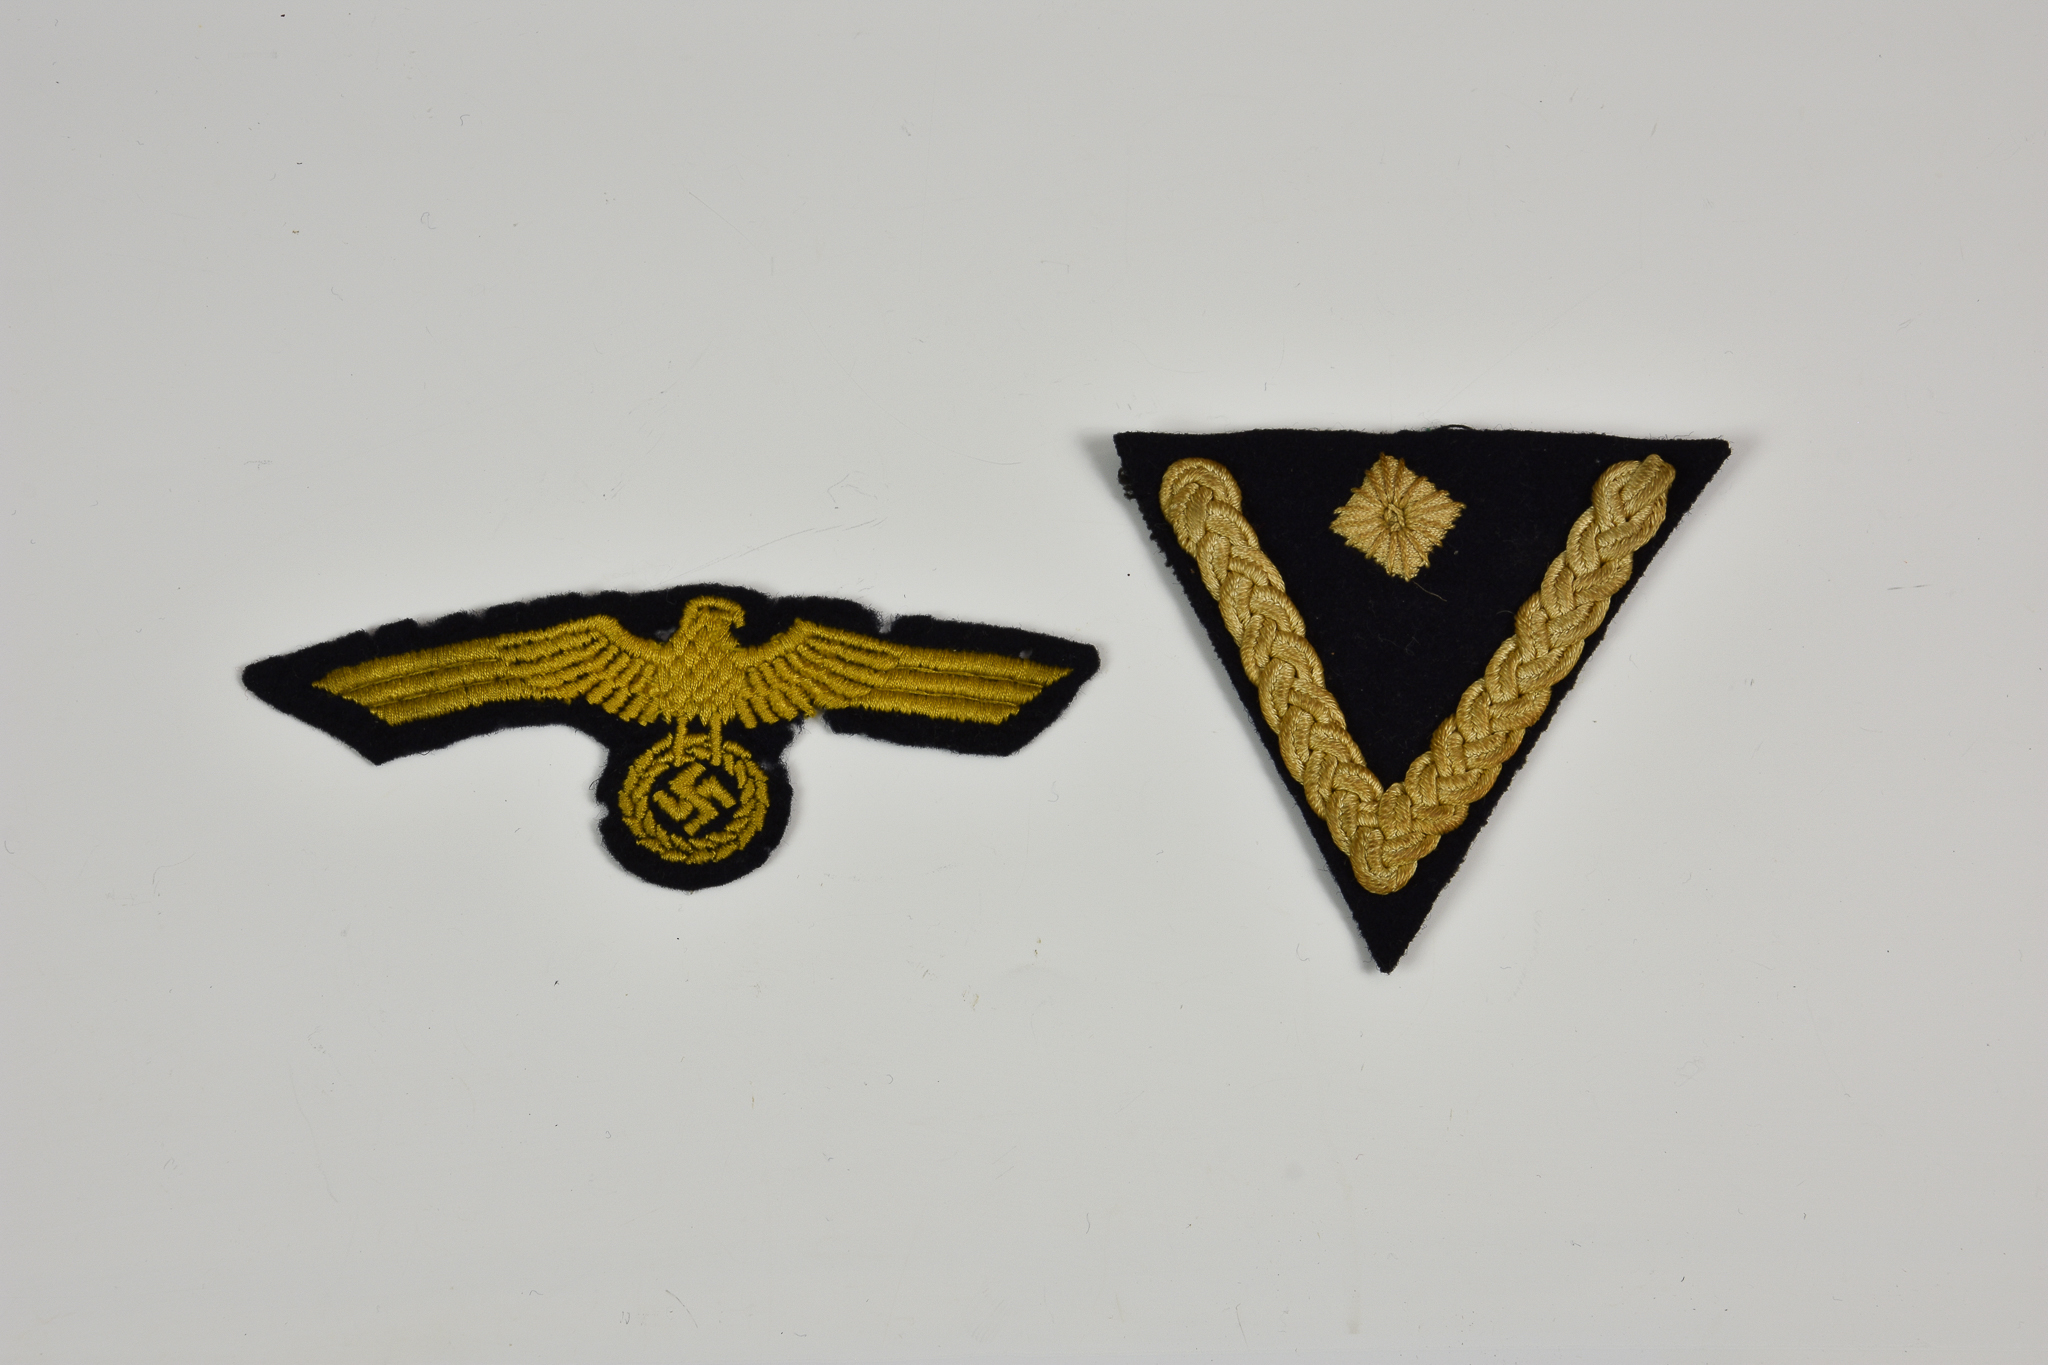 WWII Second World War German Kriegsmarine interest, comprising an original cap tally; breast eagle - Image 2 of 4